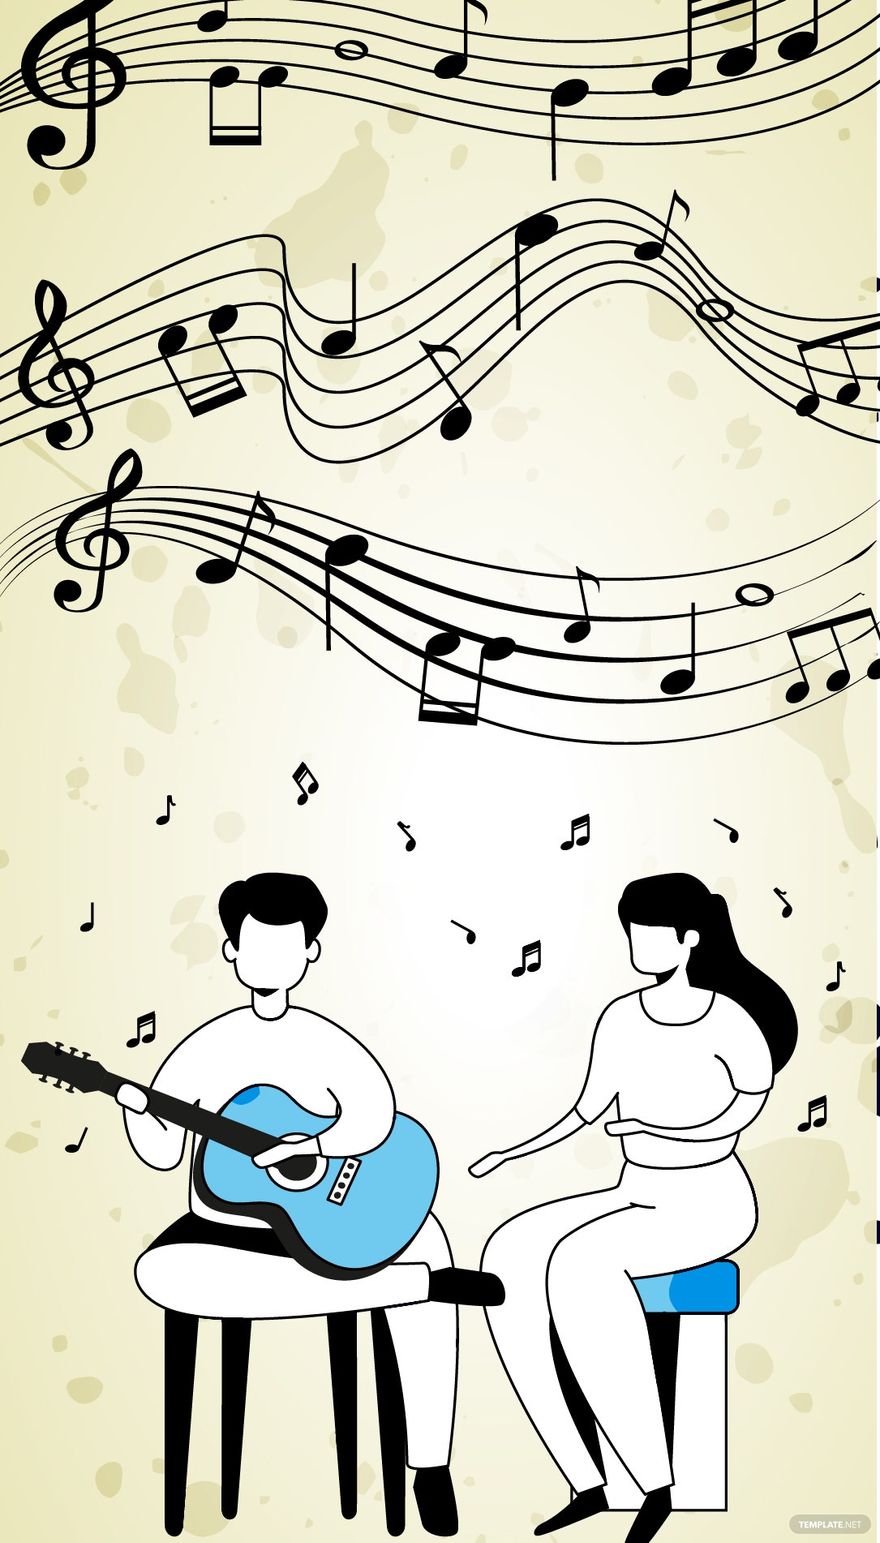 Free Music iPhone Background in Illustrator, EPS, SVG, JPG